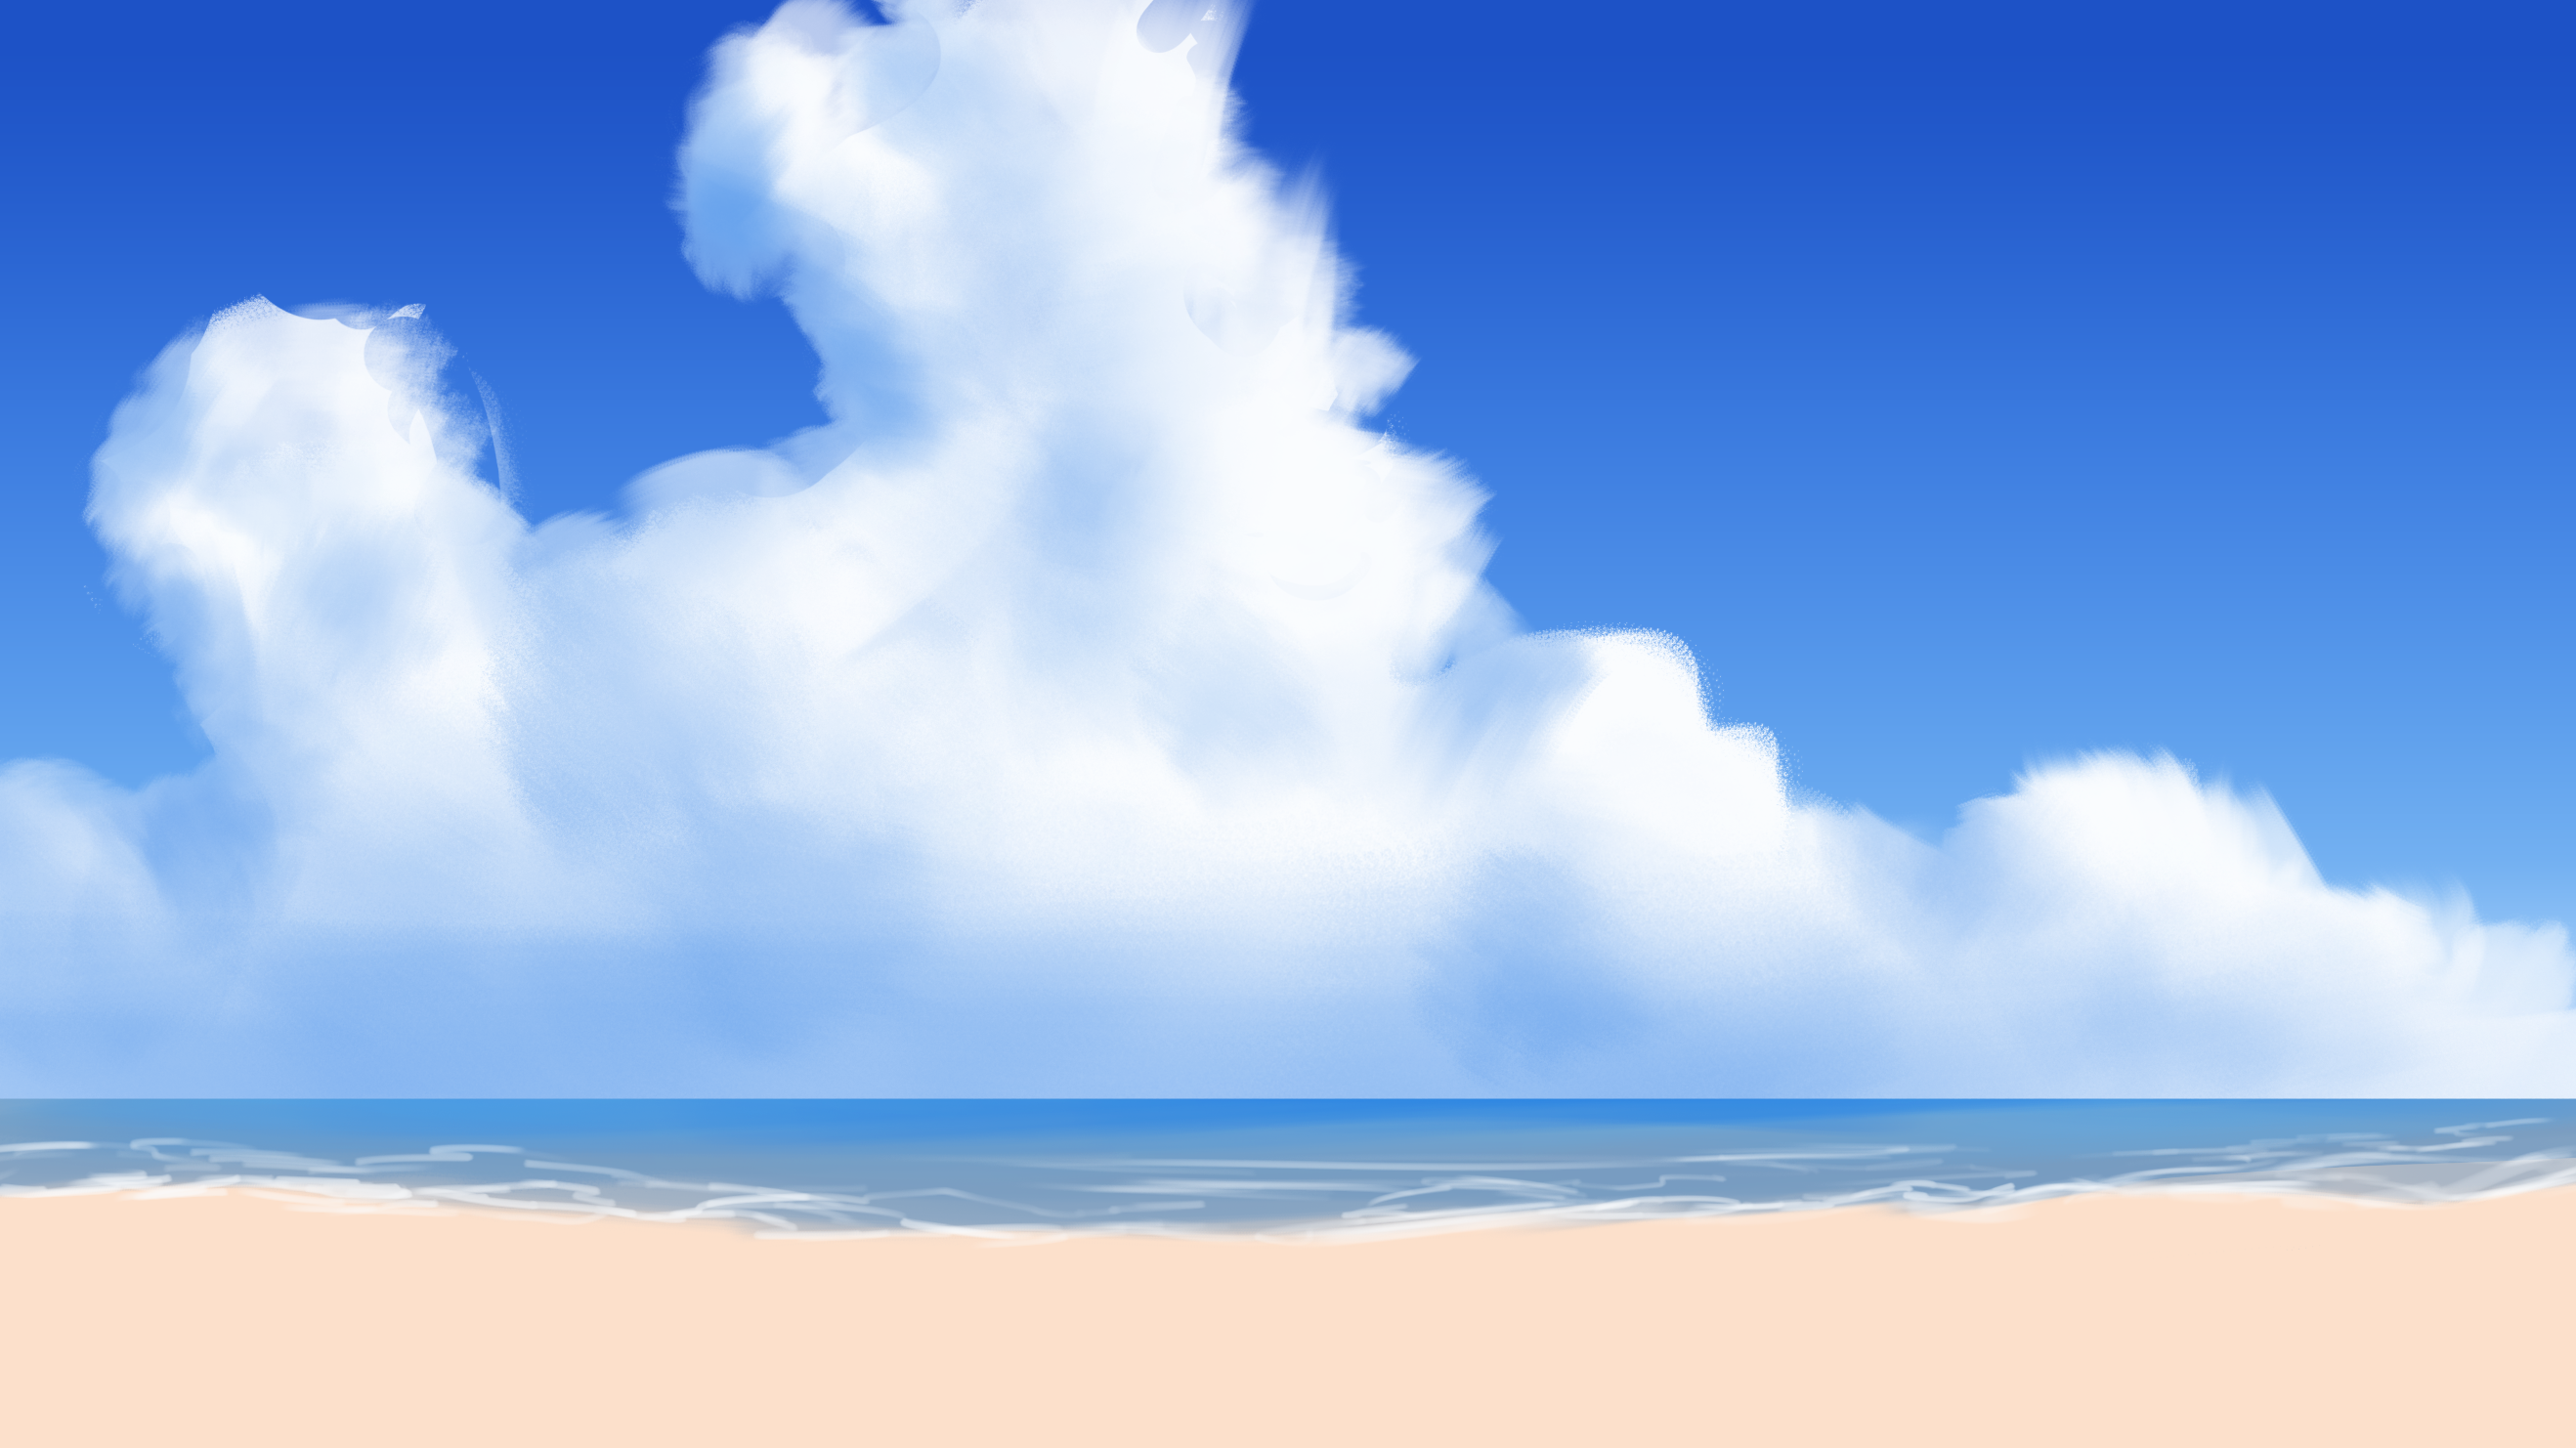 Clouds Beach Sand Waves 2636x1482